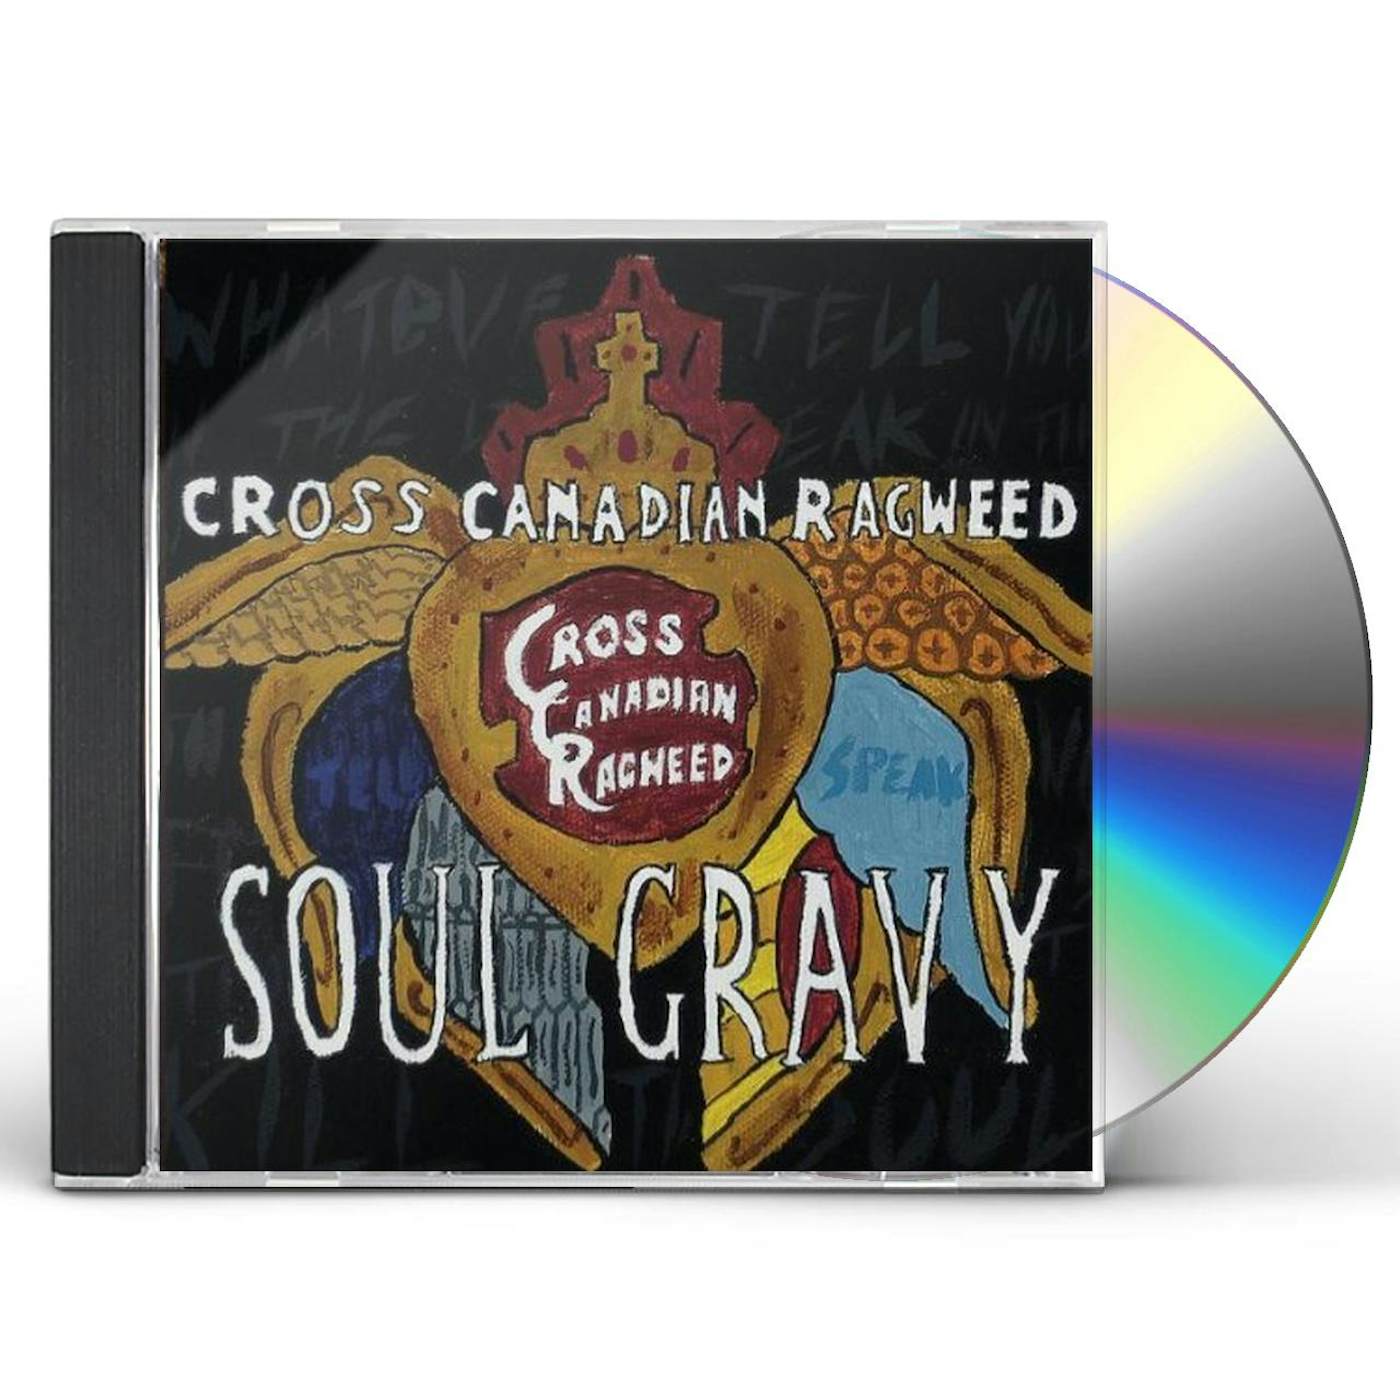 Cross Canadian Ragweed SOUL GRAVY CD